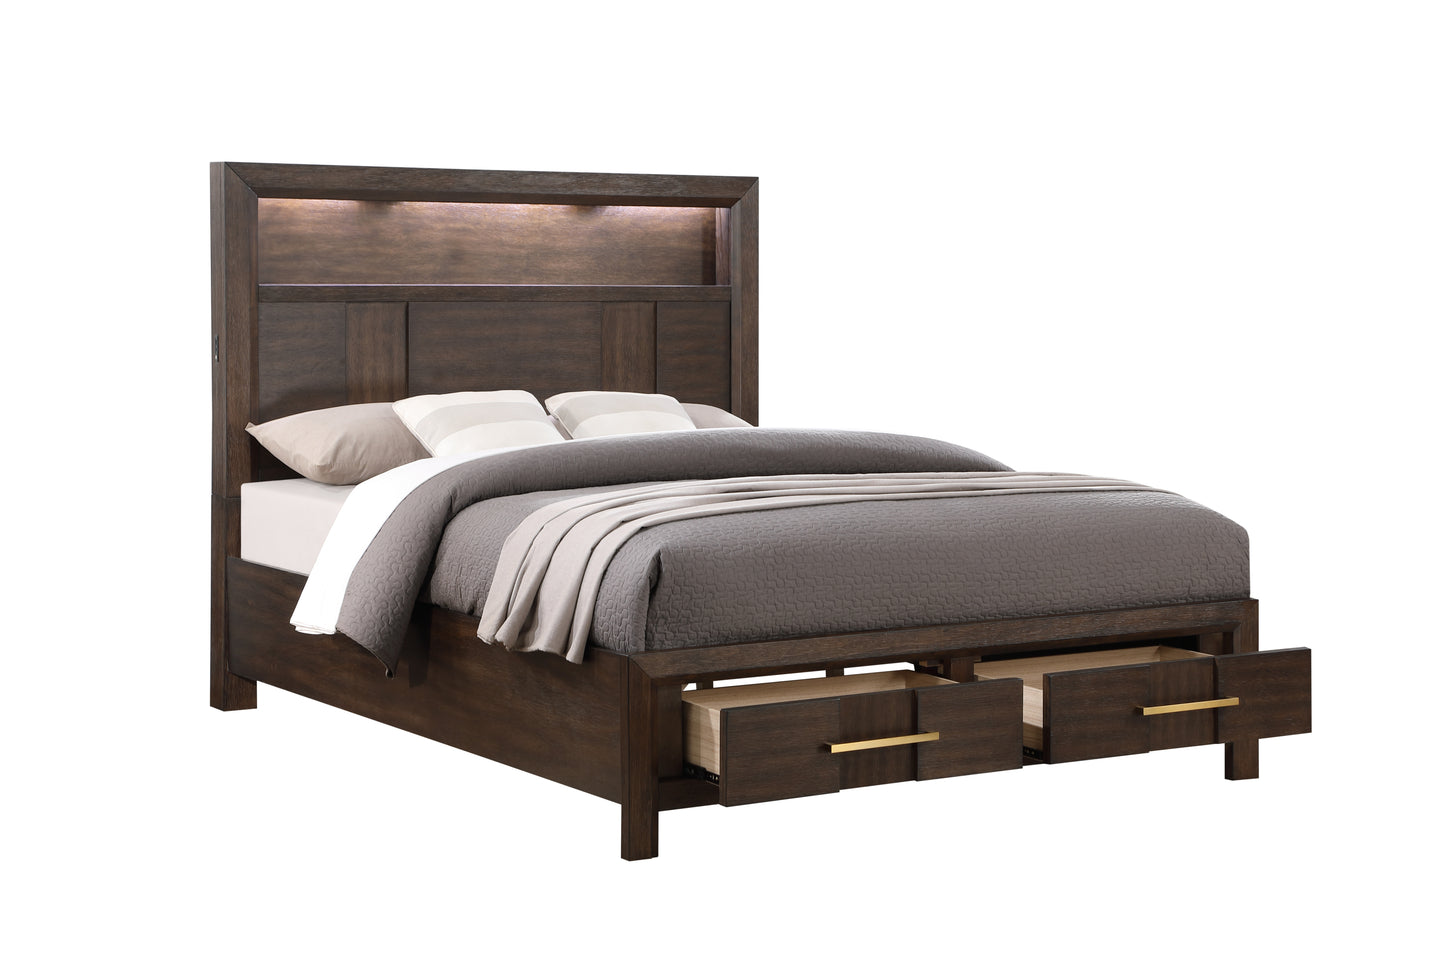 Kenzo 5 Piece Modern Style King Storage Bedroom Set Made with Wood, LED Headboard, Bluetooth Speakers & USB Ports - Walnut